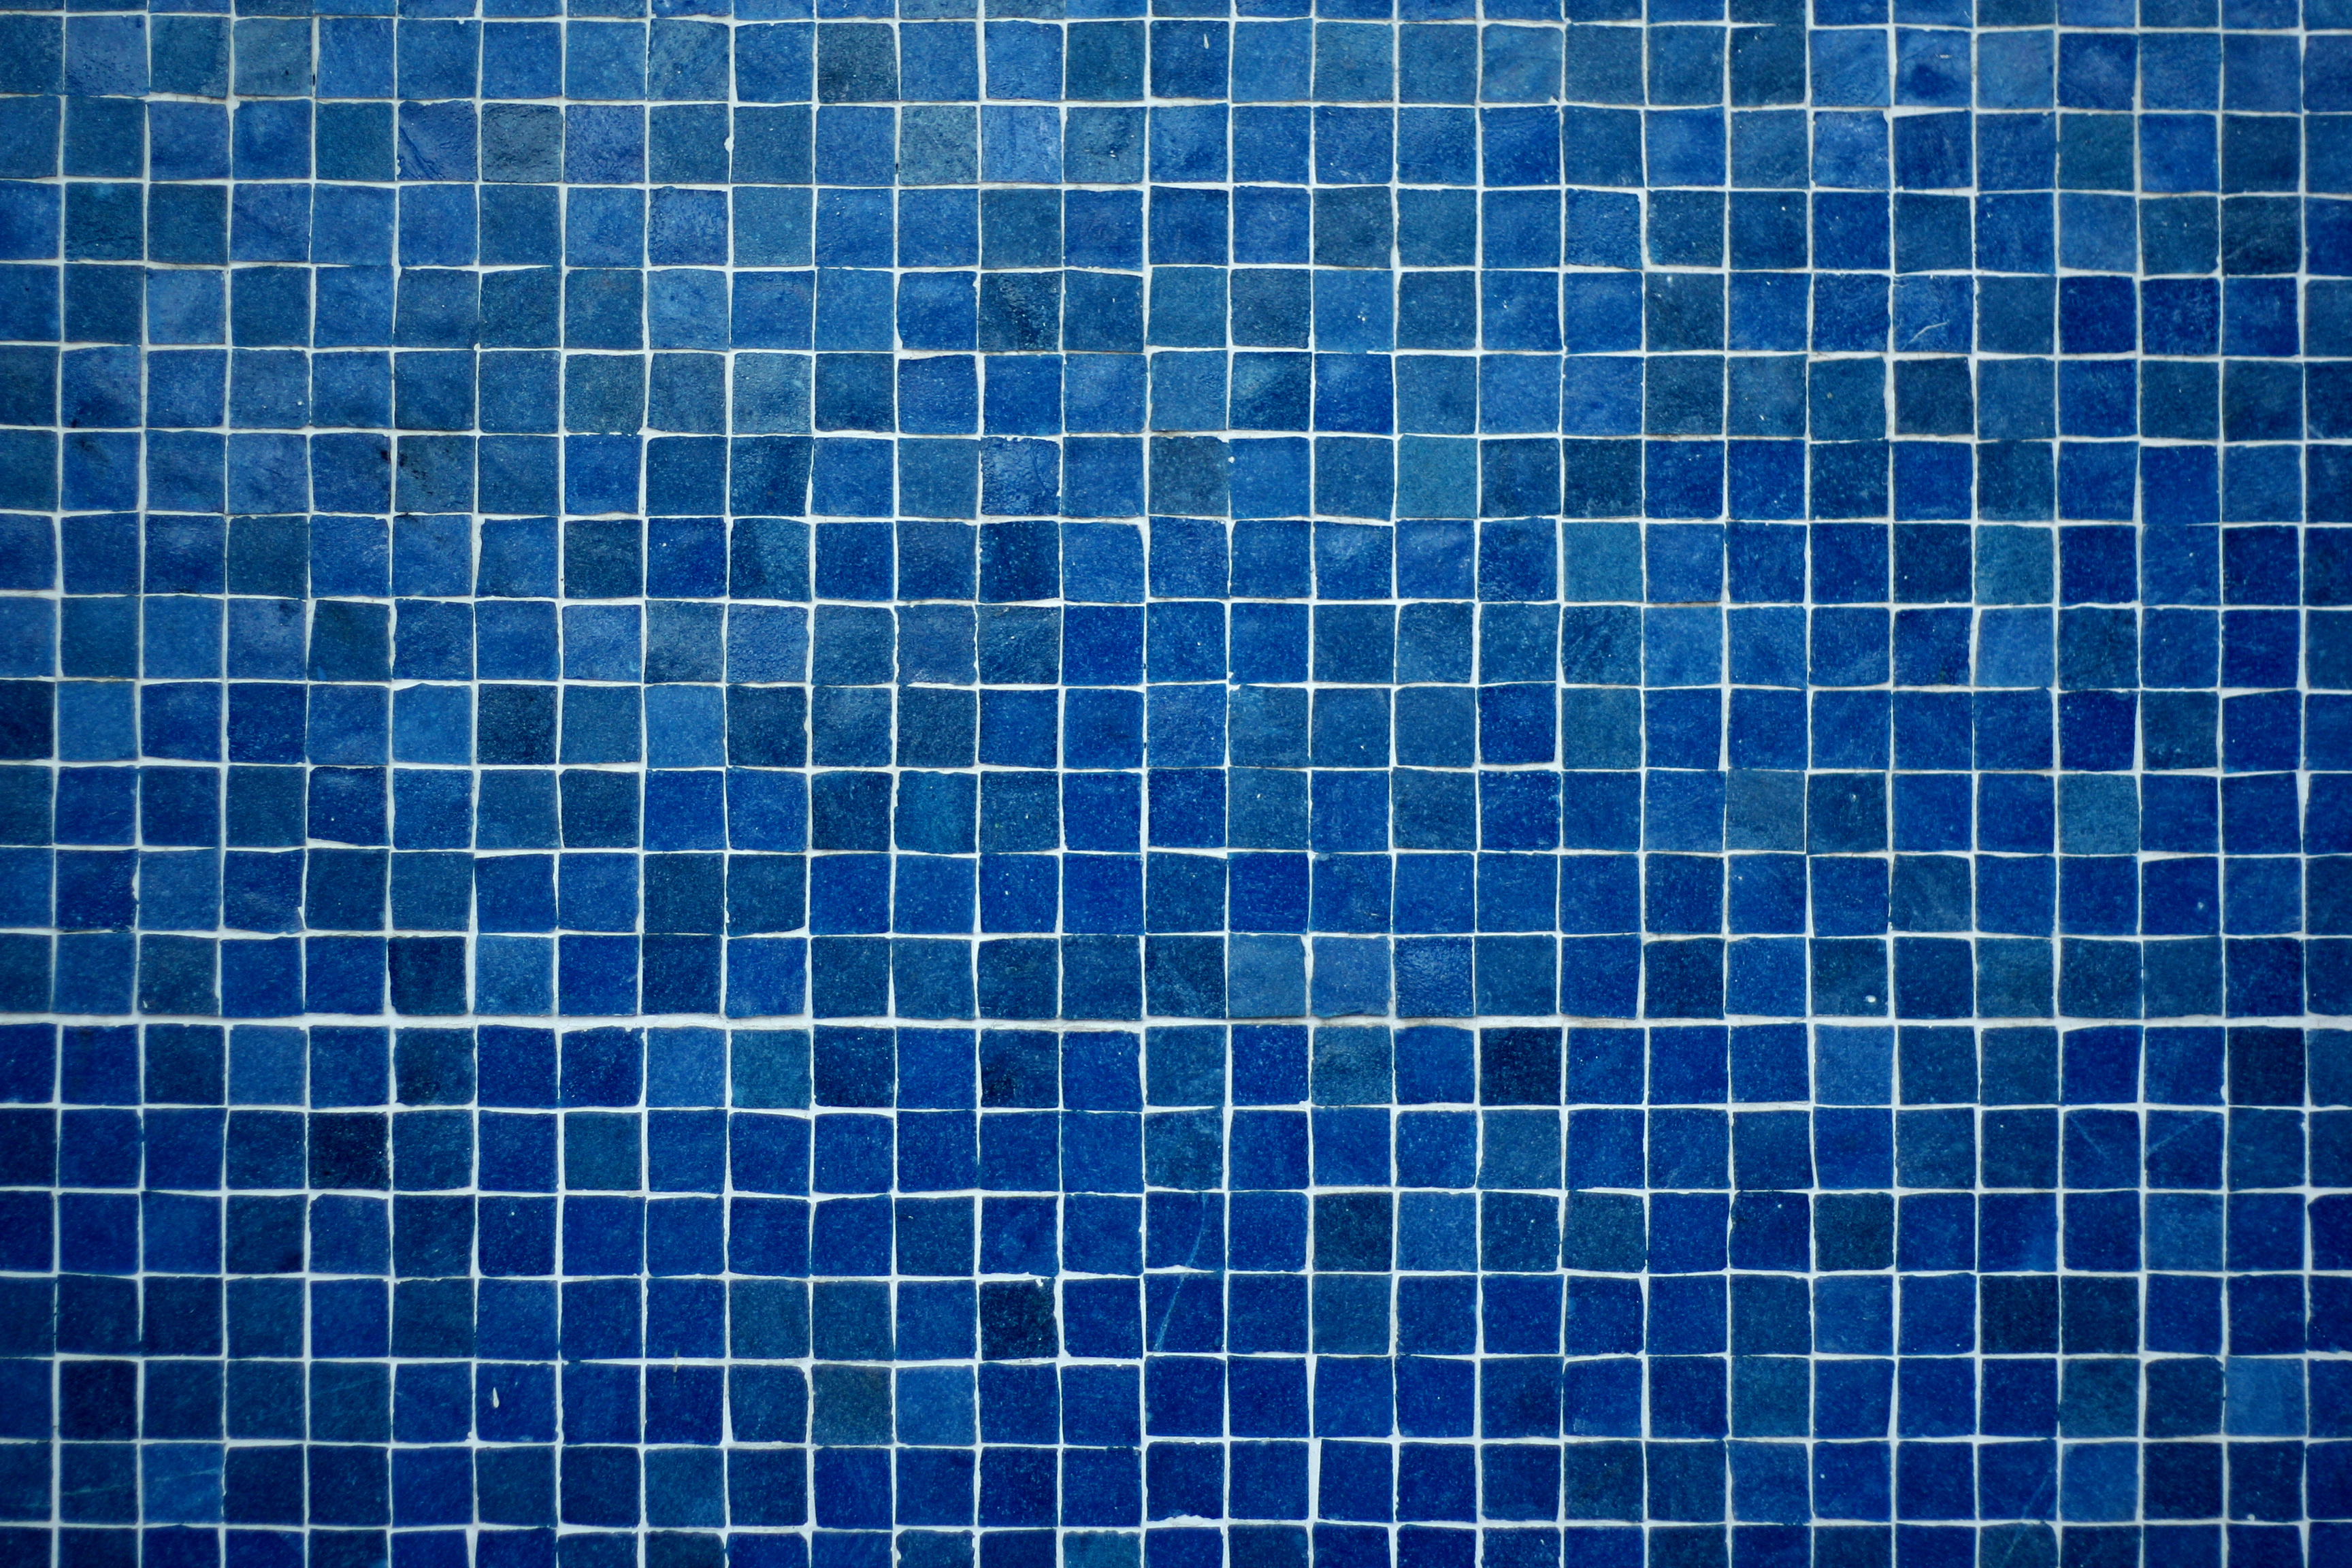 Mosaic Blue Marrakesh Tiles  Wallpaper by A  Streets Prints